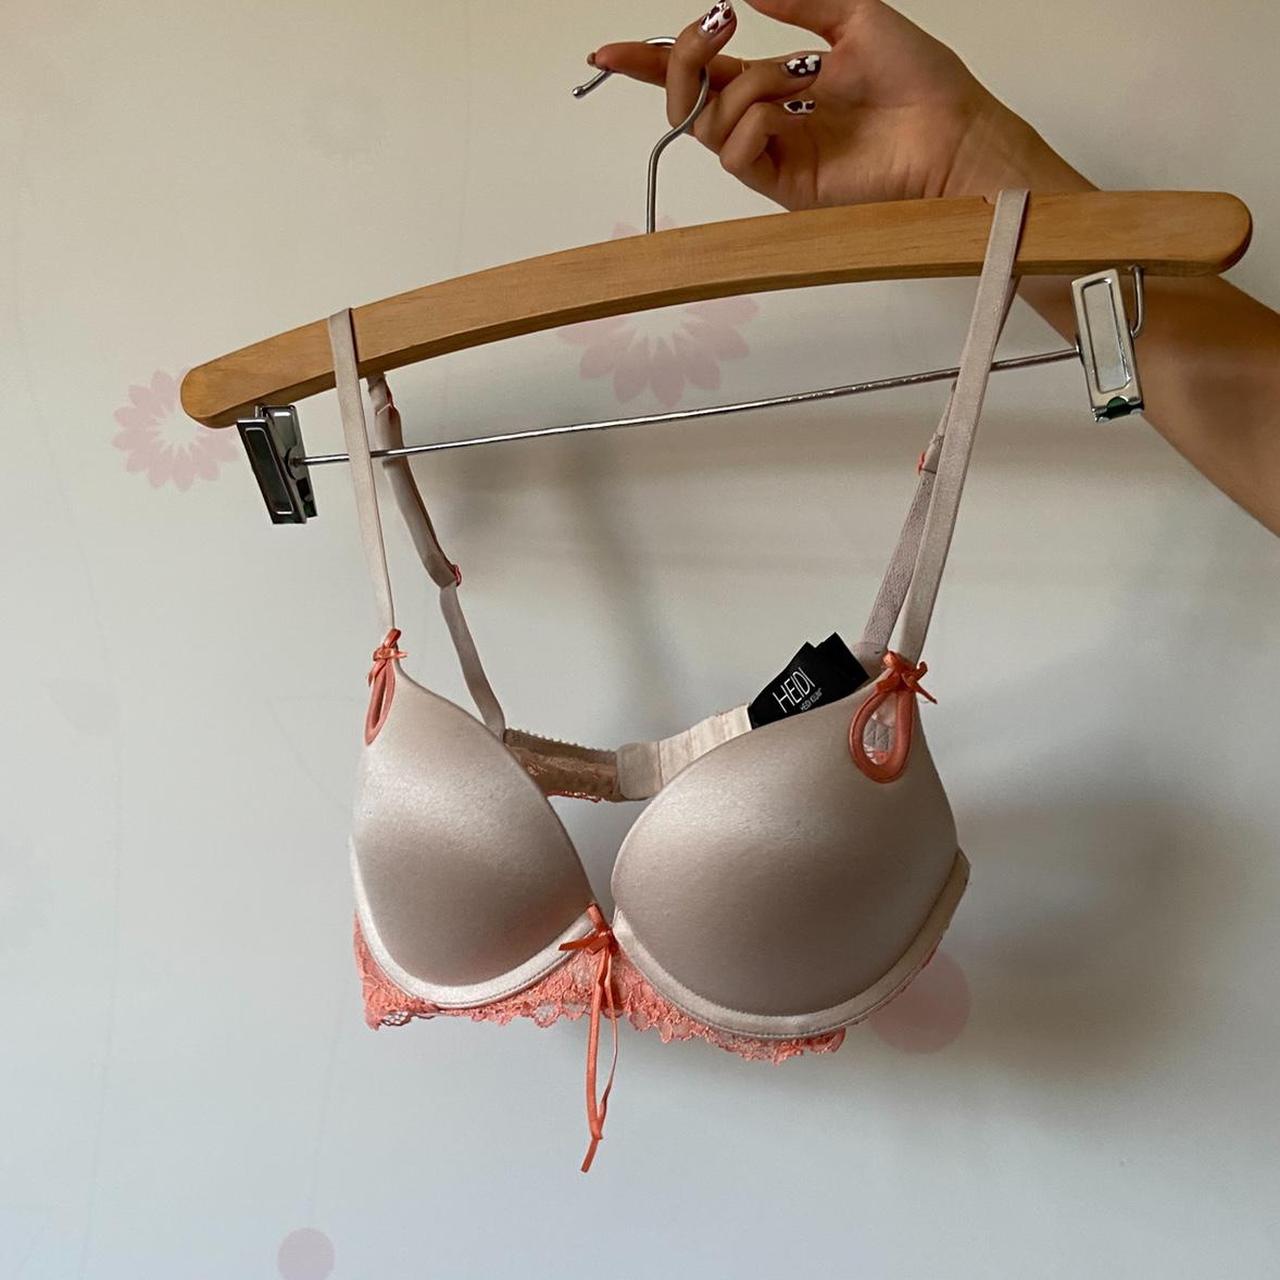 Product Image 2 - Heidi Klum bra 🌸

This bra